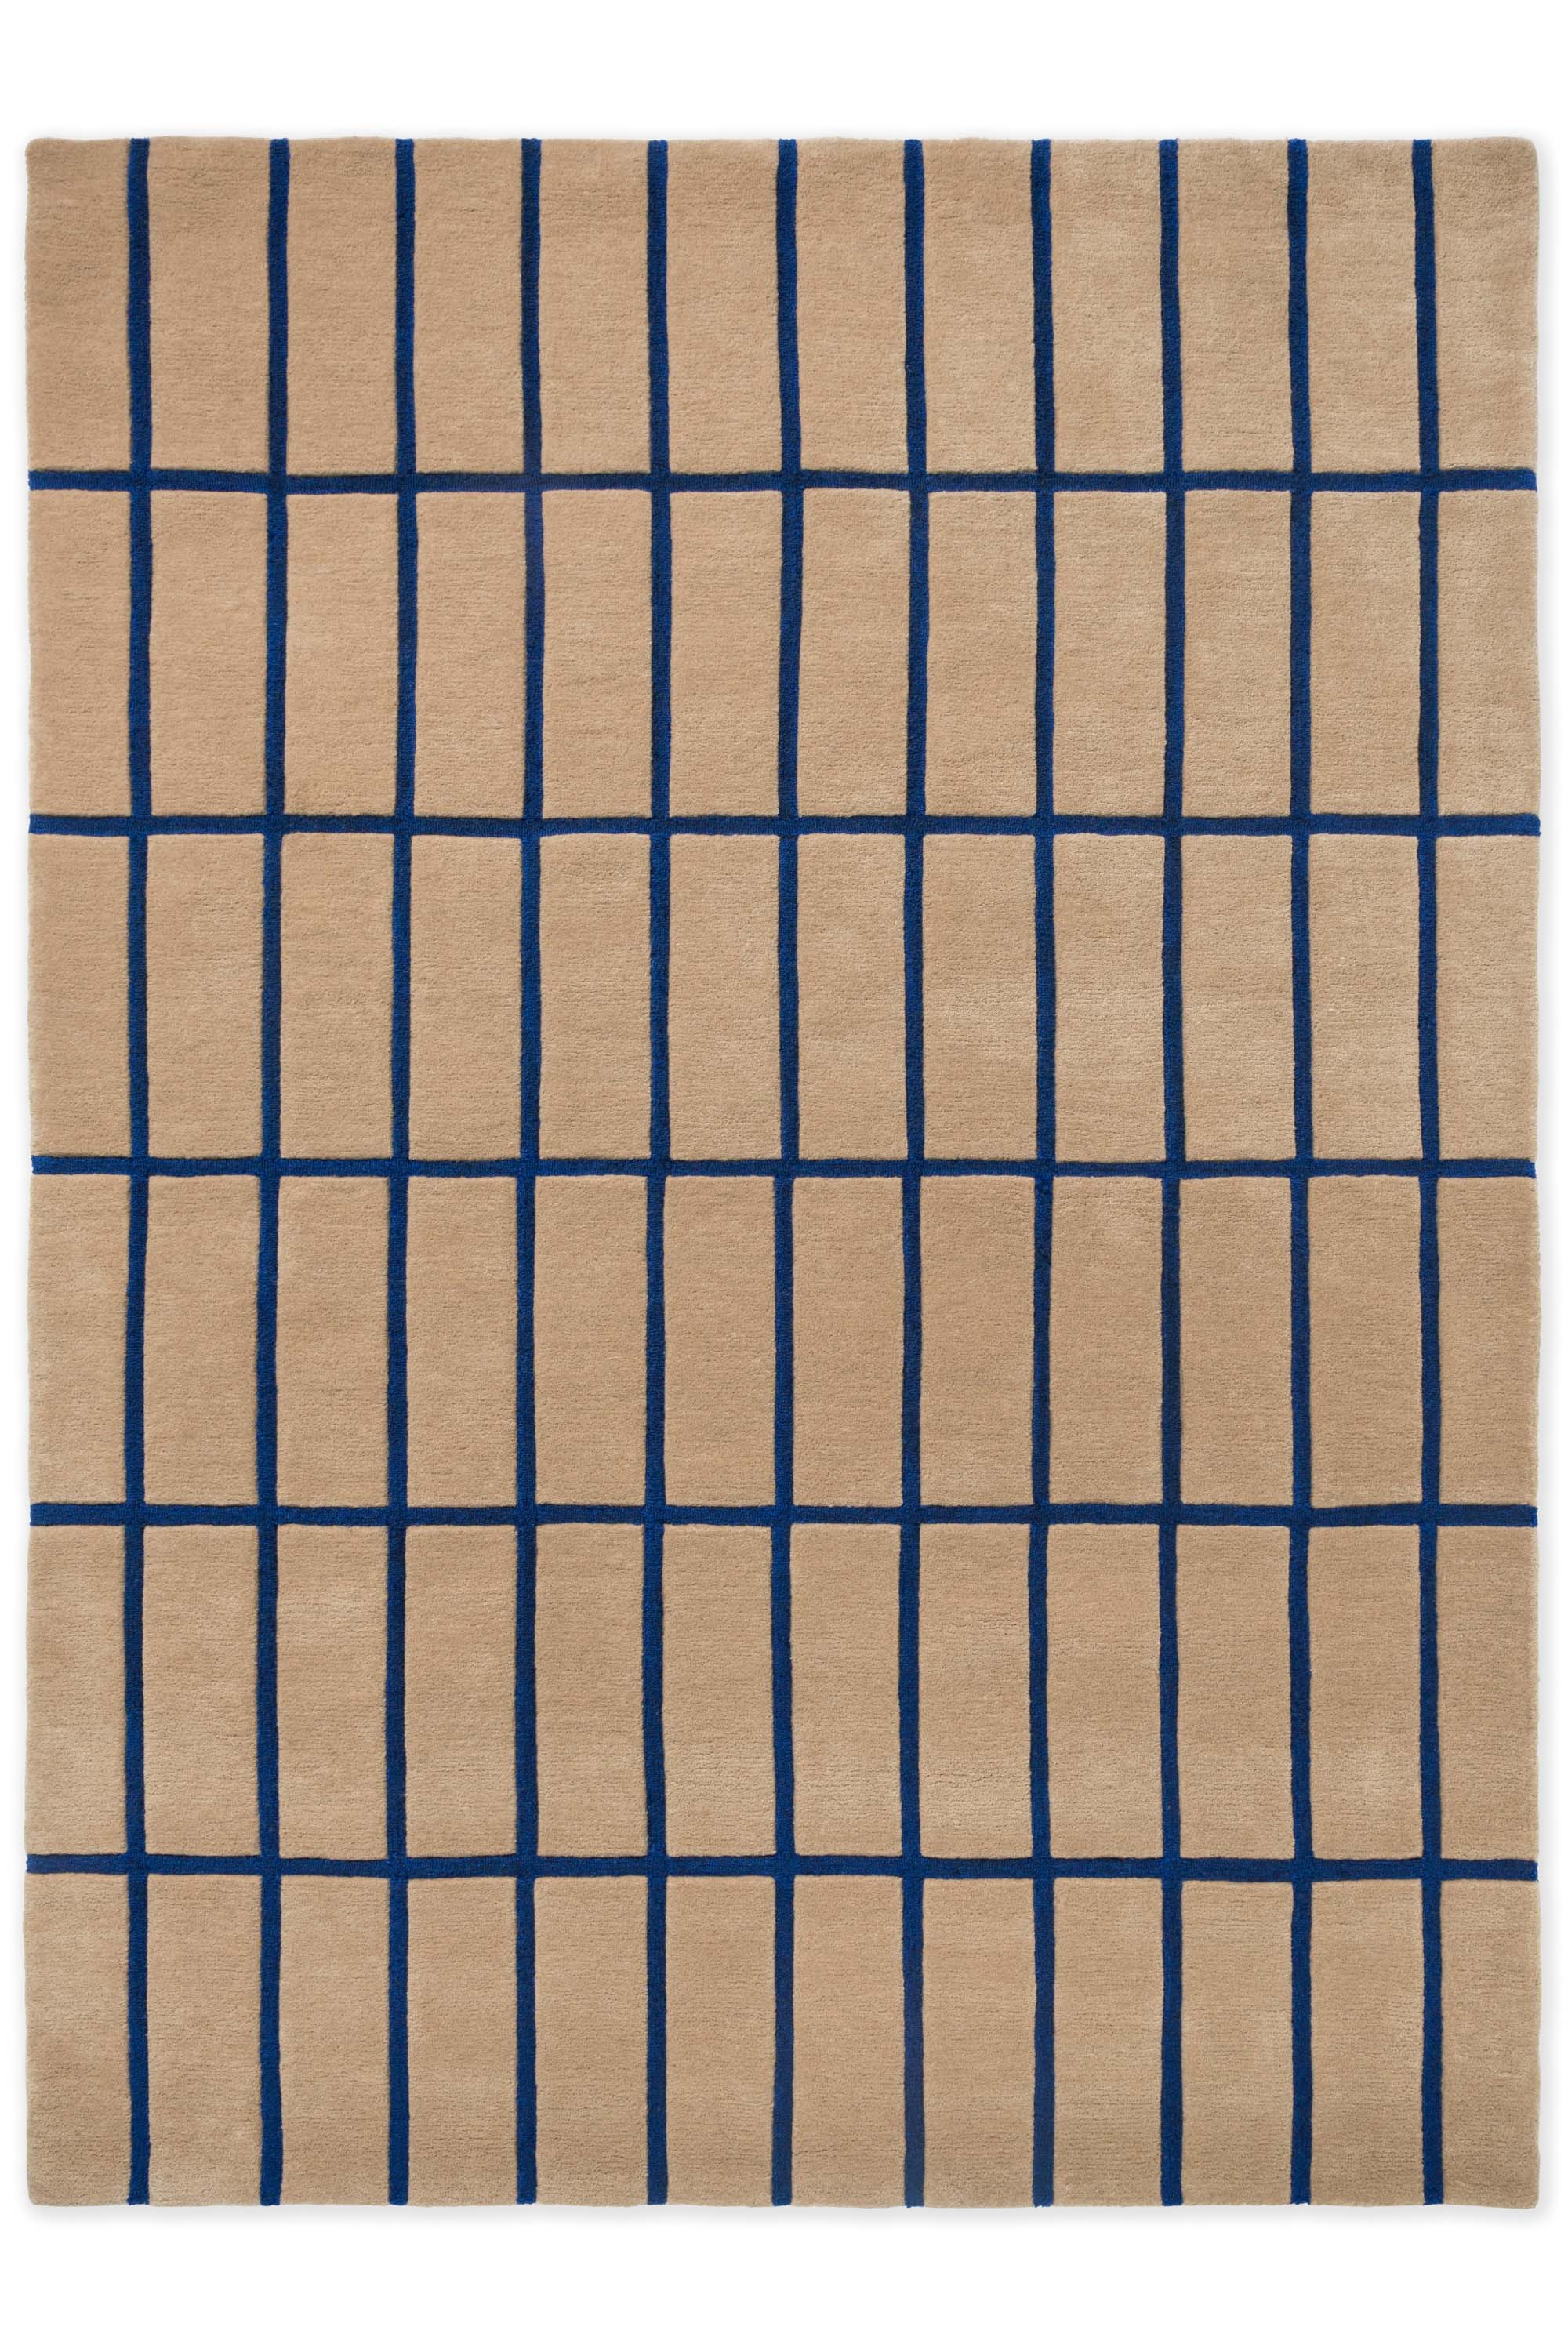 Geometric rug with blue grid pattern